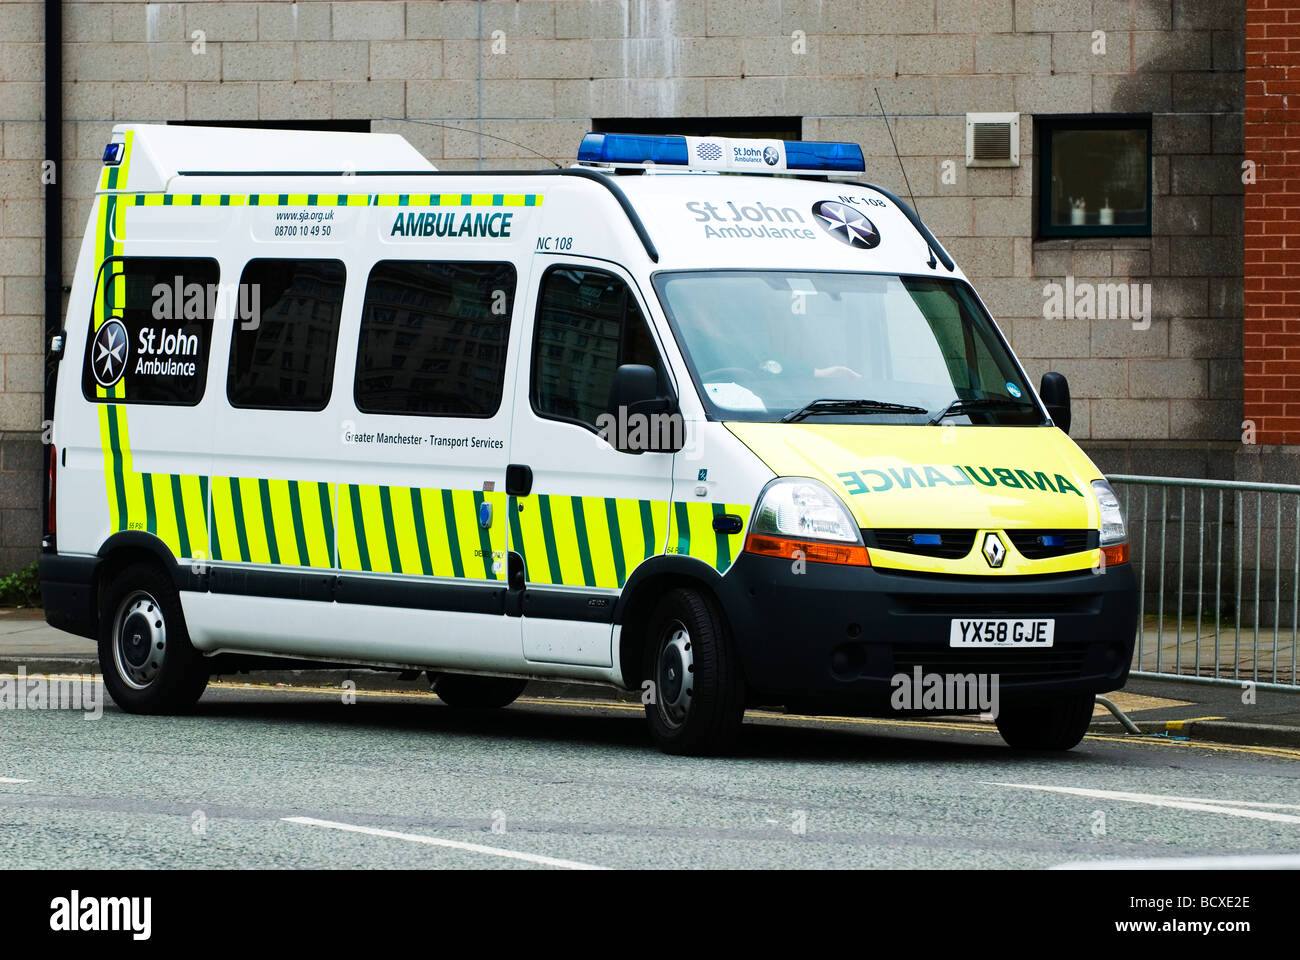 St.John ambulance vehicle in Manchester city center Stock Photo